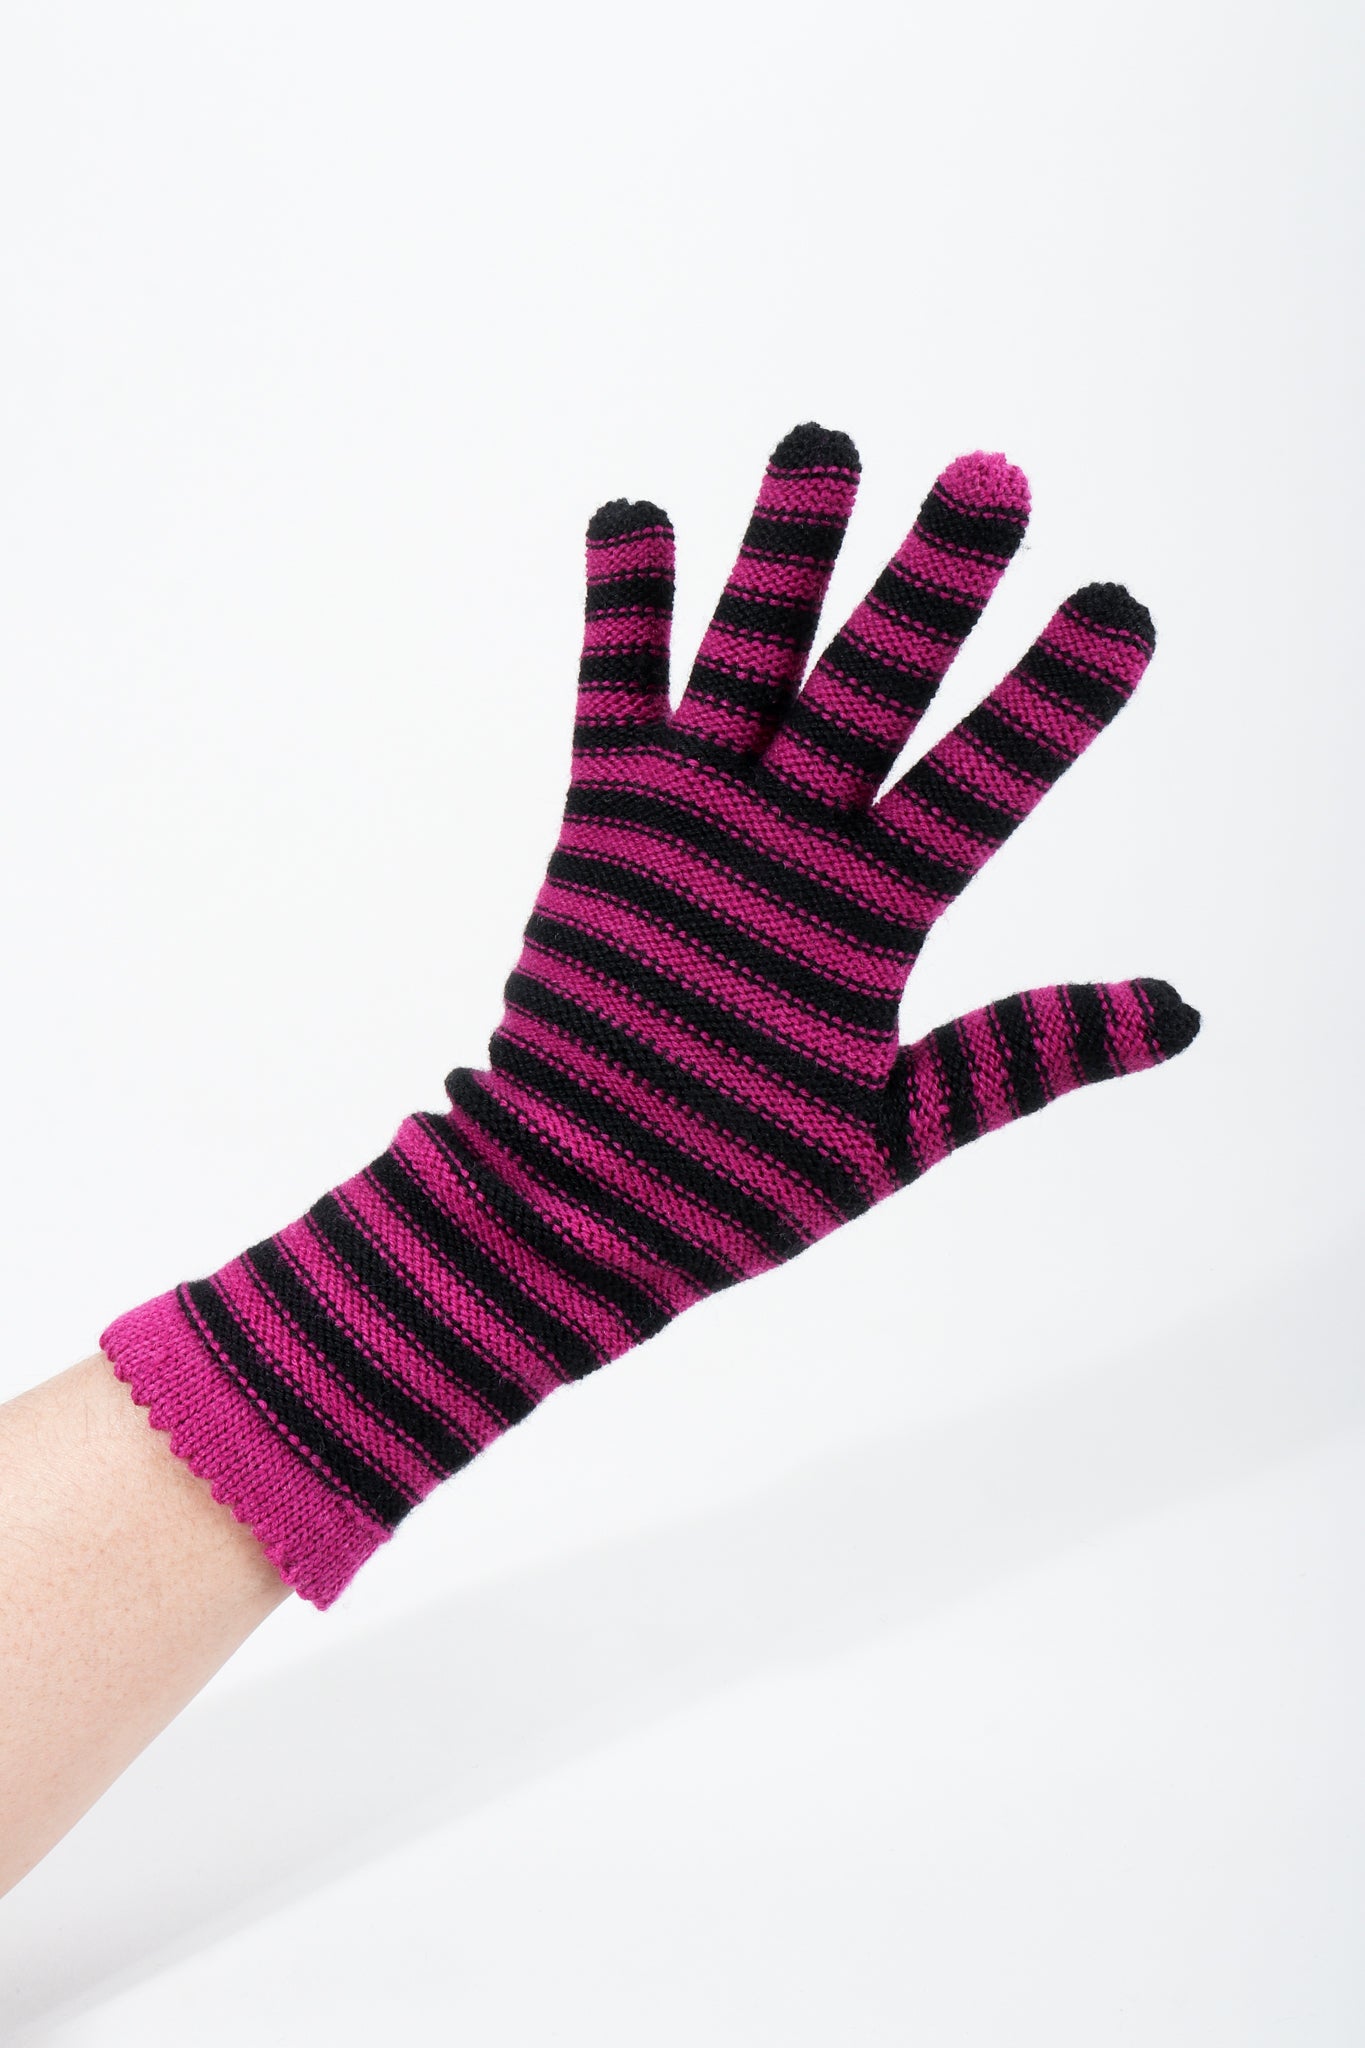 Vintage Sonia Rykiel Fuchsia Stripe Knit Gloves on hand extended